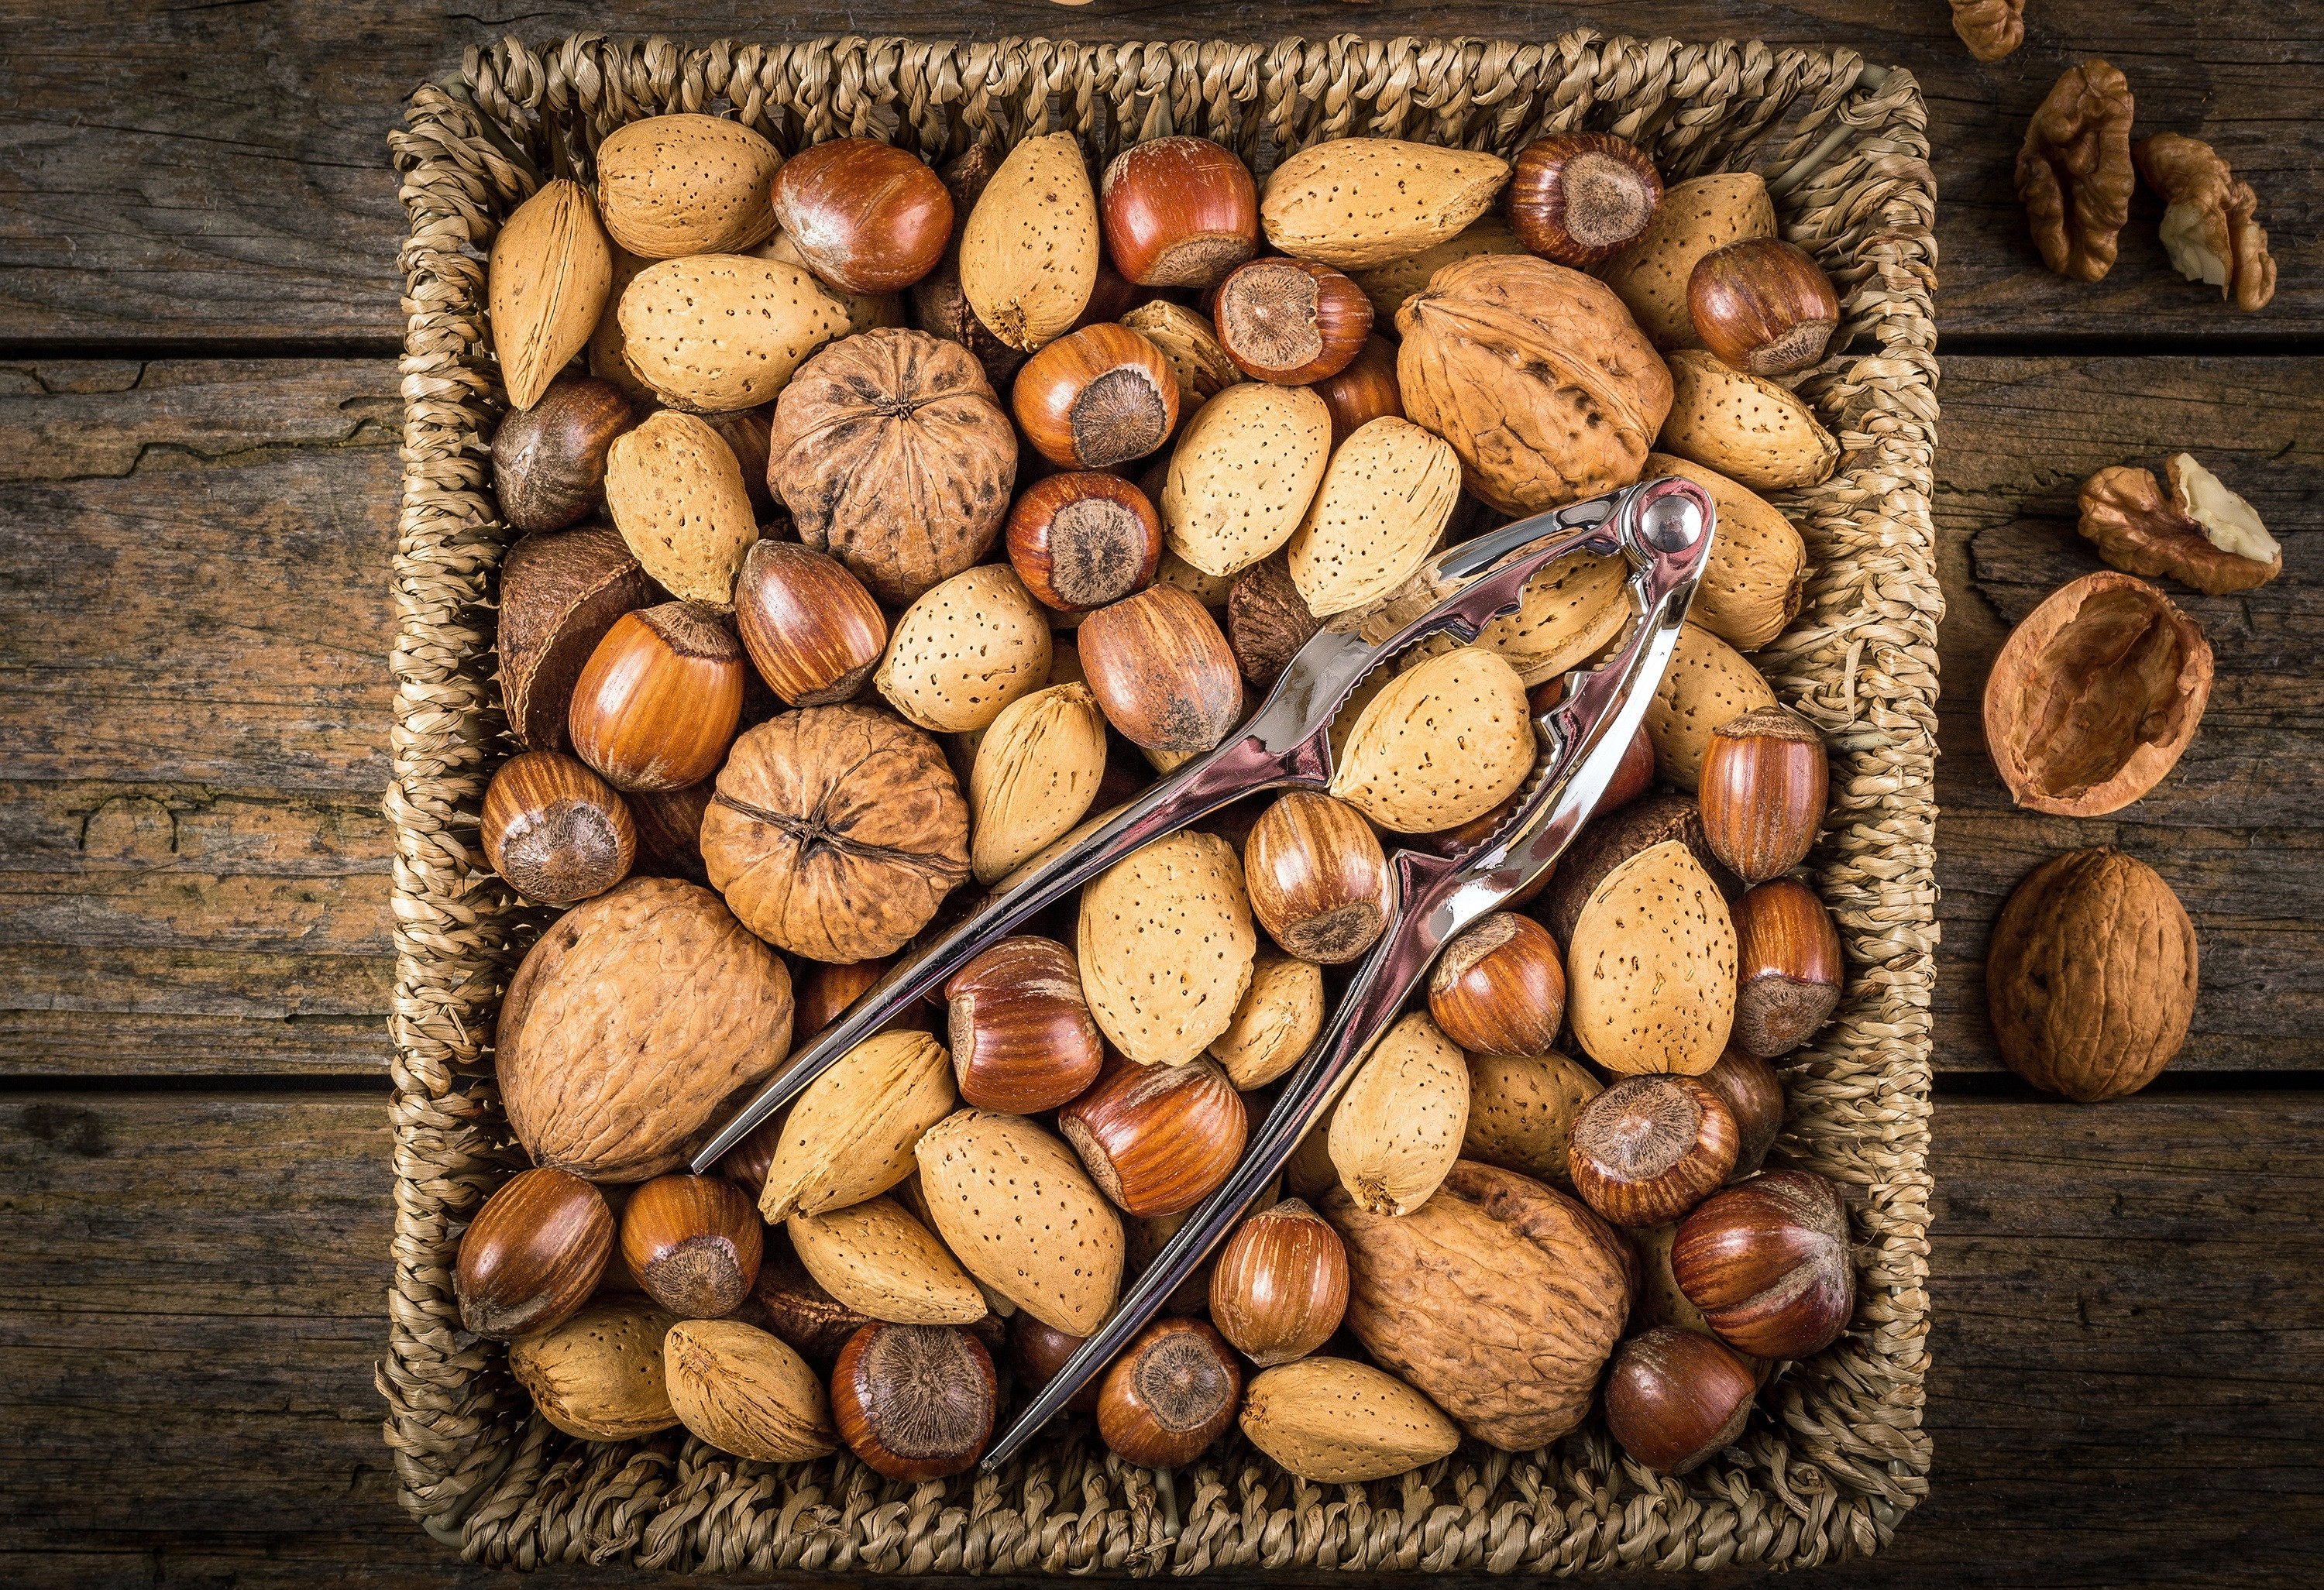 General 3000x2053 nuts food baskets wooden surface walnuts hazelnut closeup nutcracker (tool) tools